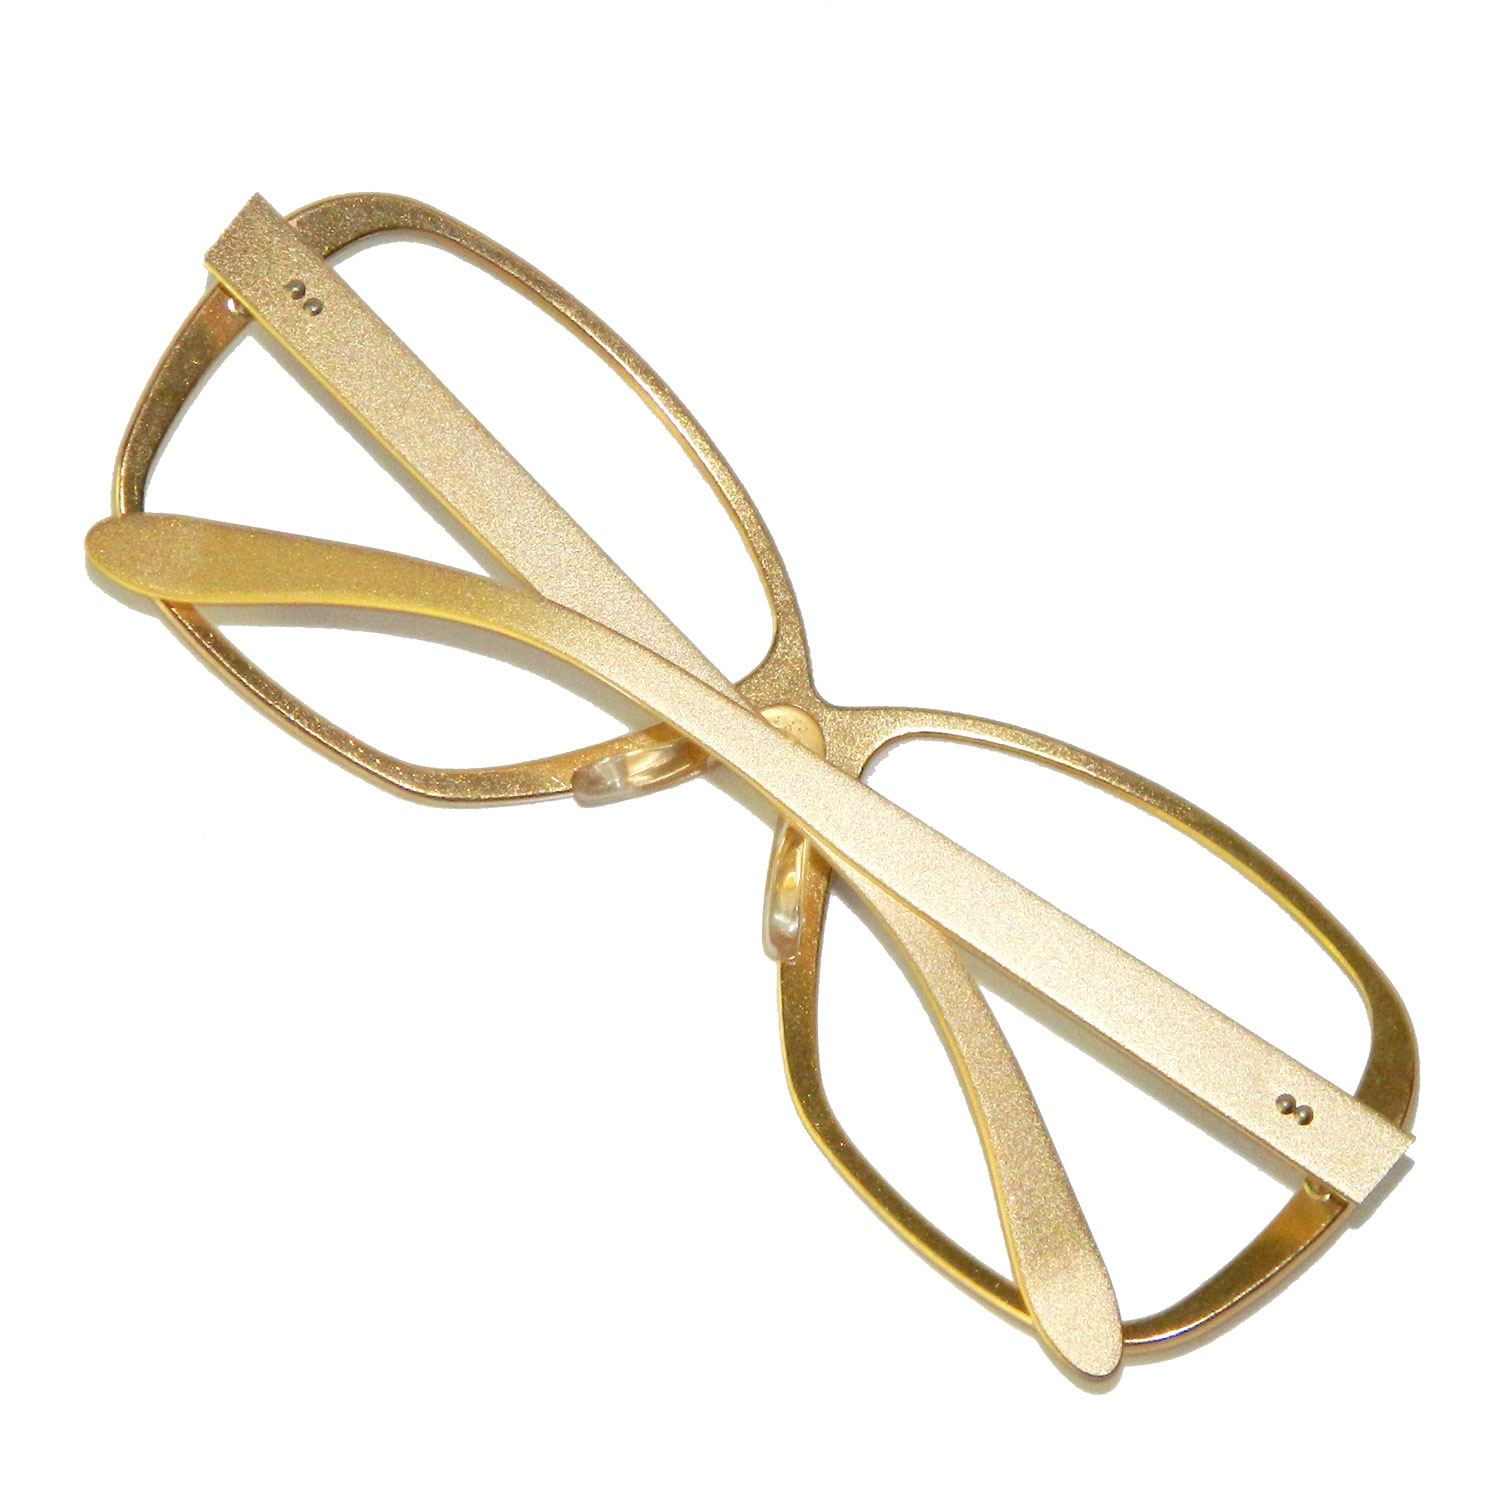 1980s Christian Dior eyeglass frames